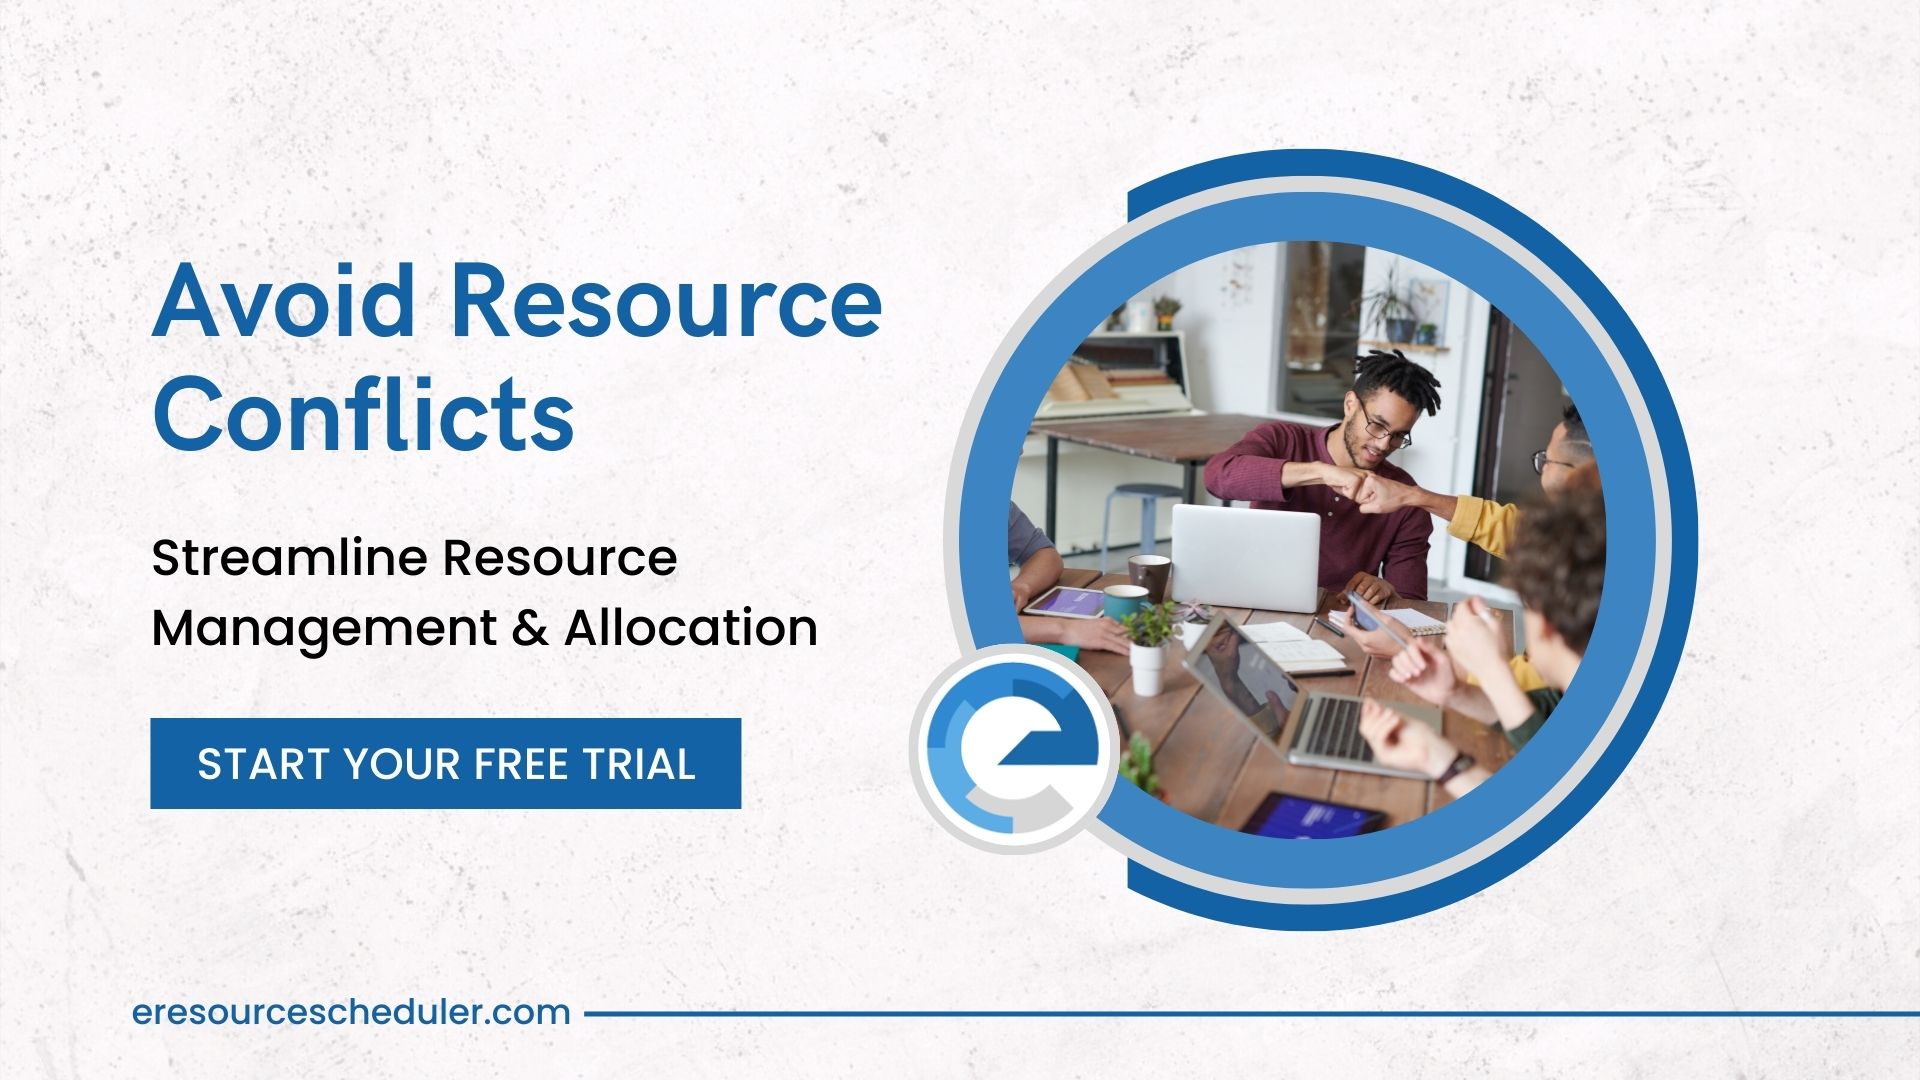  Enterprise Resource Management tool